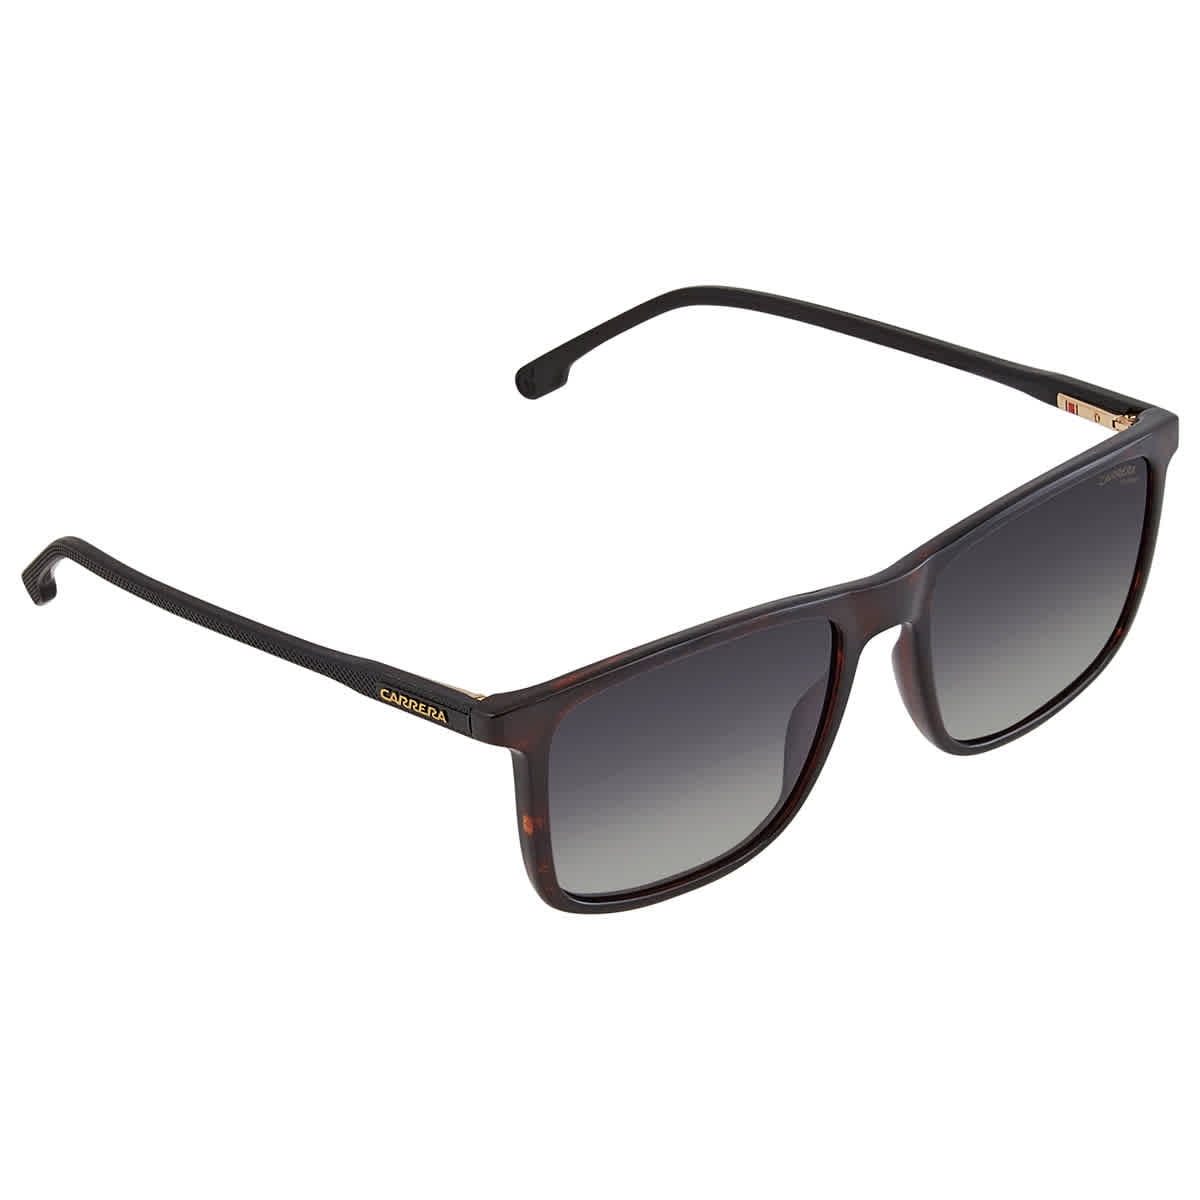 Carrera Polarized Grey Gradient Rectangular Unisex Sunglasses CARRRERA  231/S 0AB8 55 